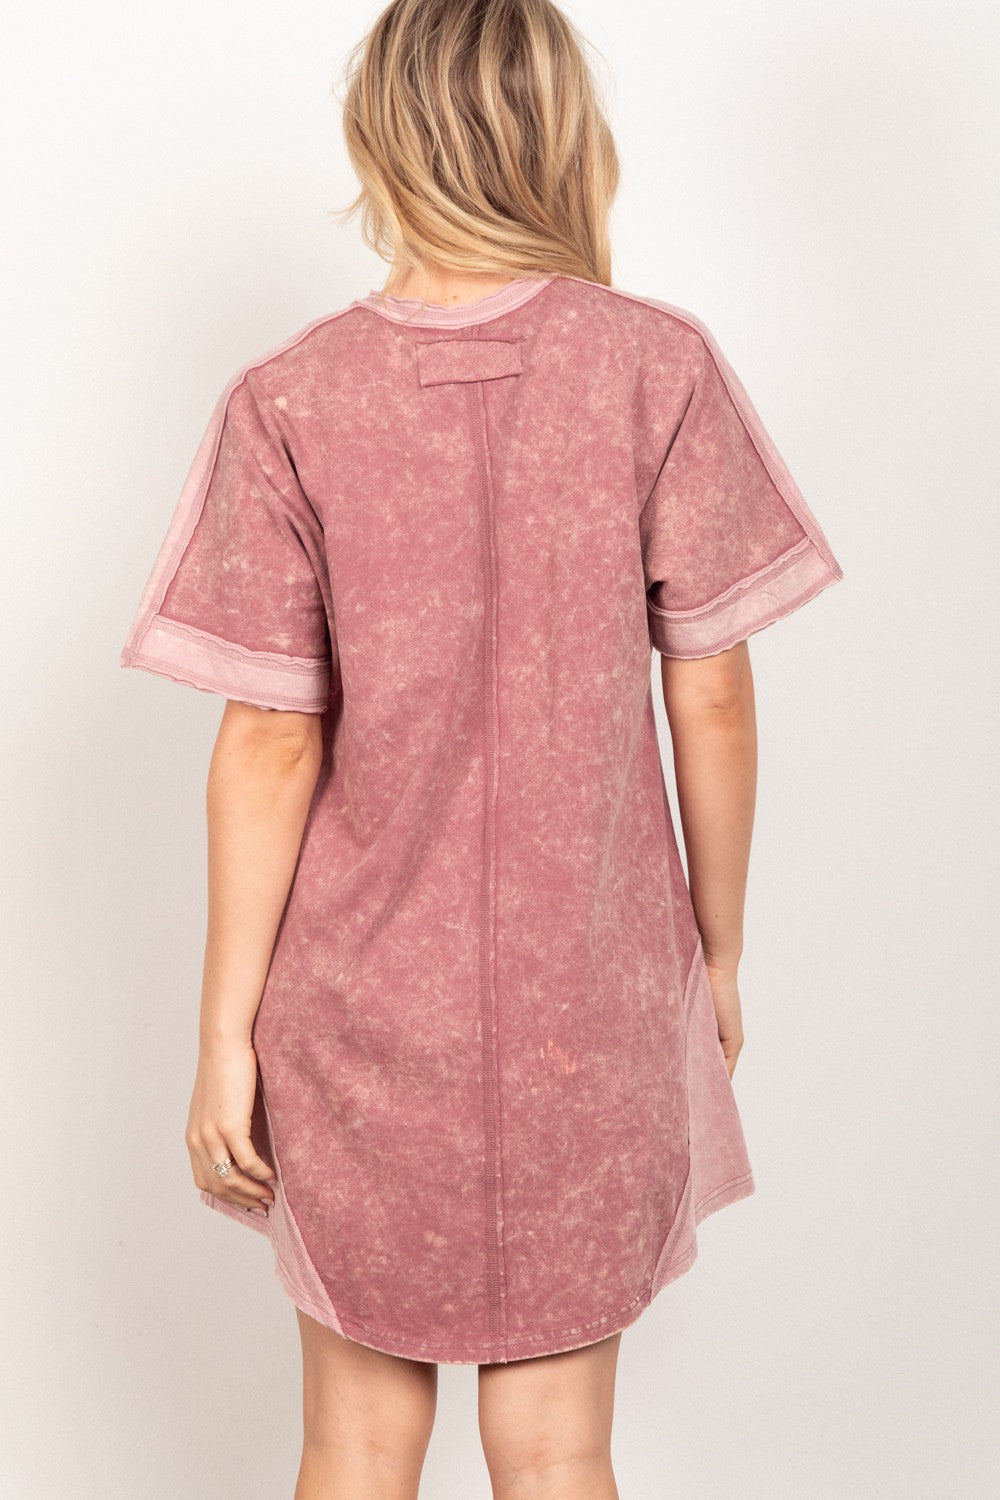 Mauve Moment T-Shirt Mini Dress - Cheeky Chic Boutique